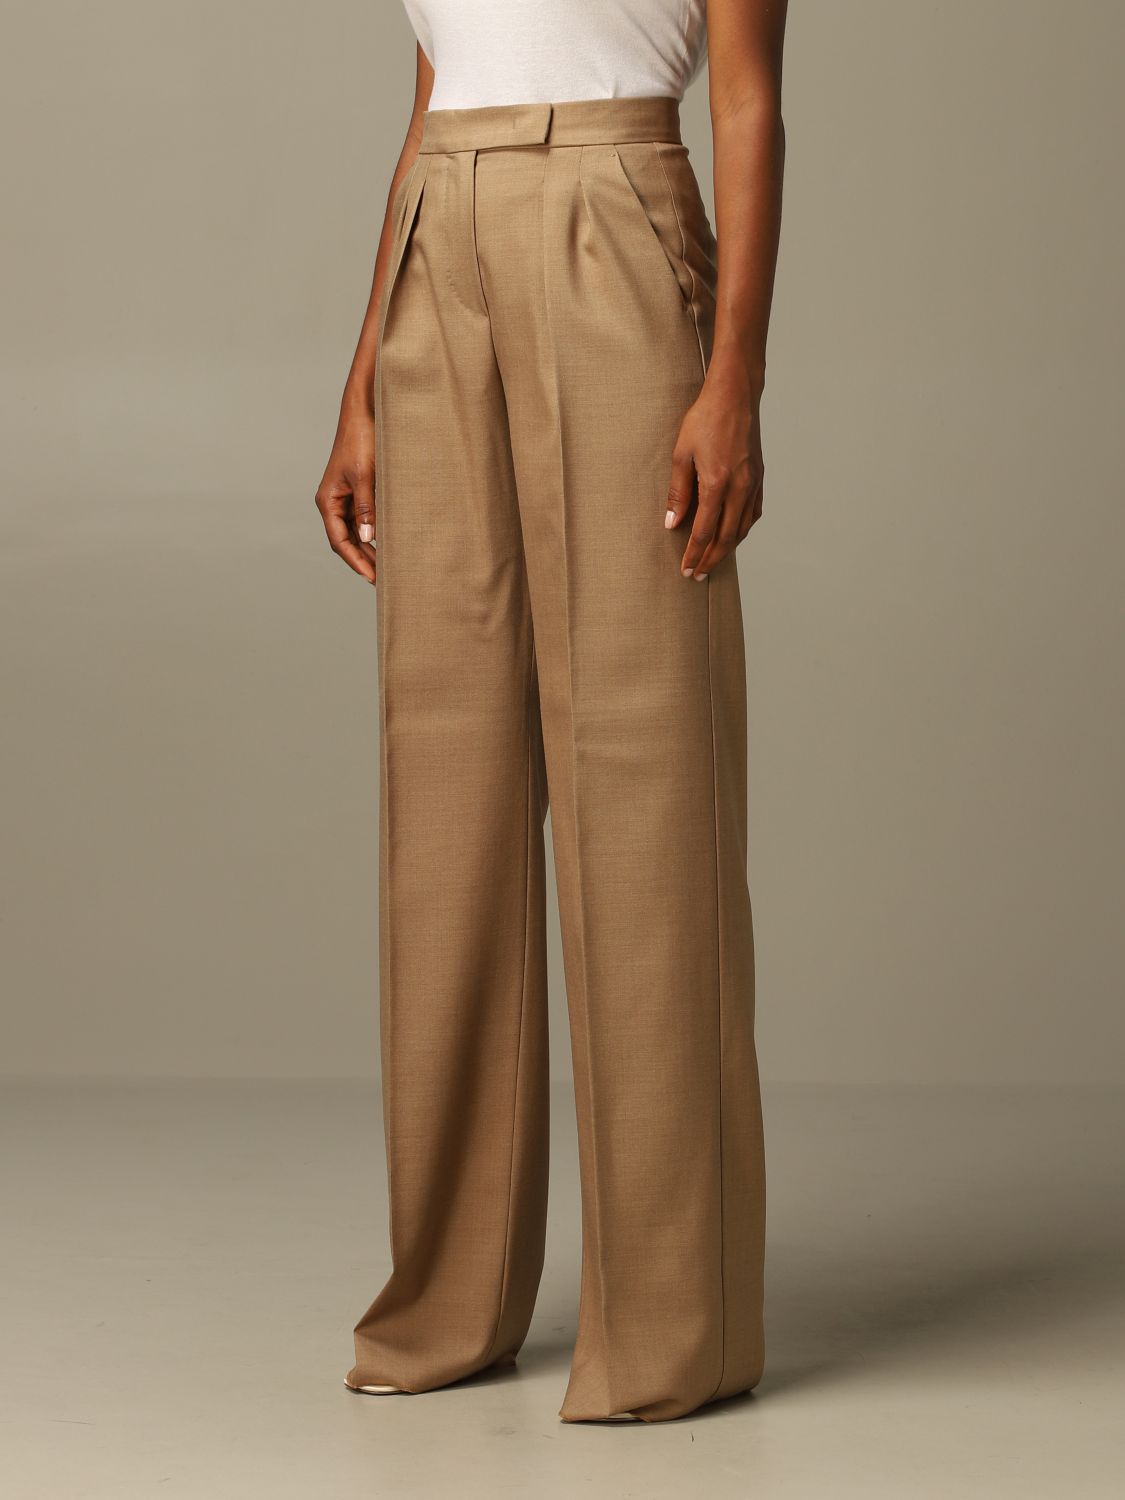 Galea Max Mara wide trousers in mohair silk | Pants Max Mara Women Camel | Pants Max Mara